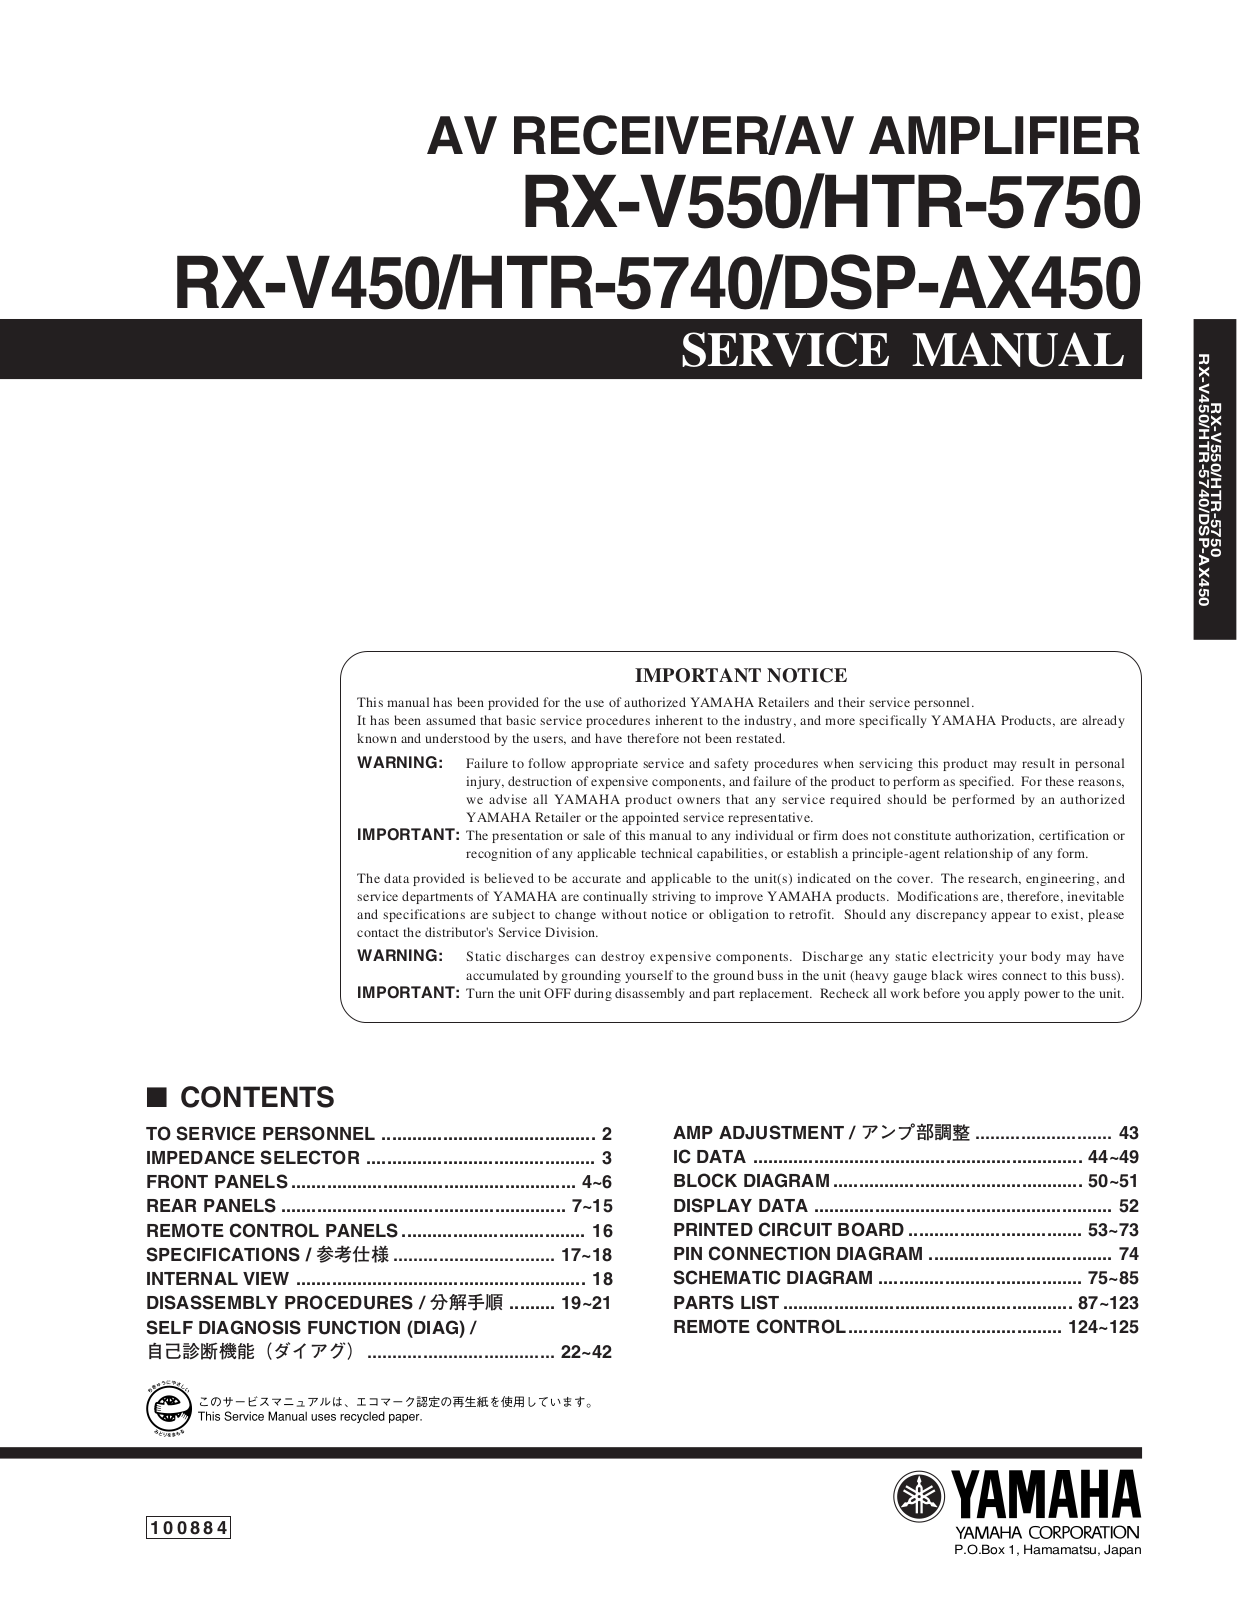 Yamaha RXV-550 Service manual